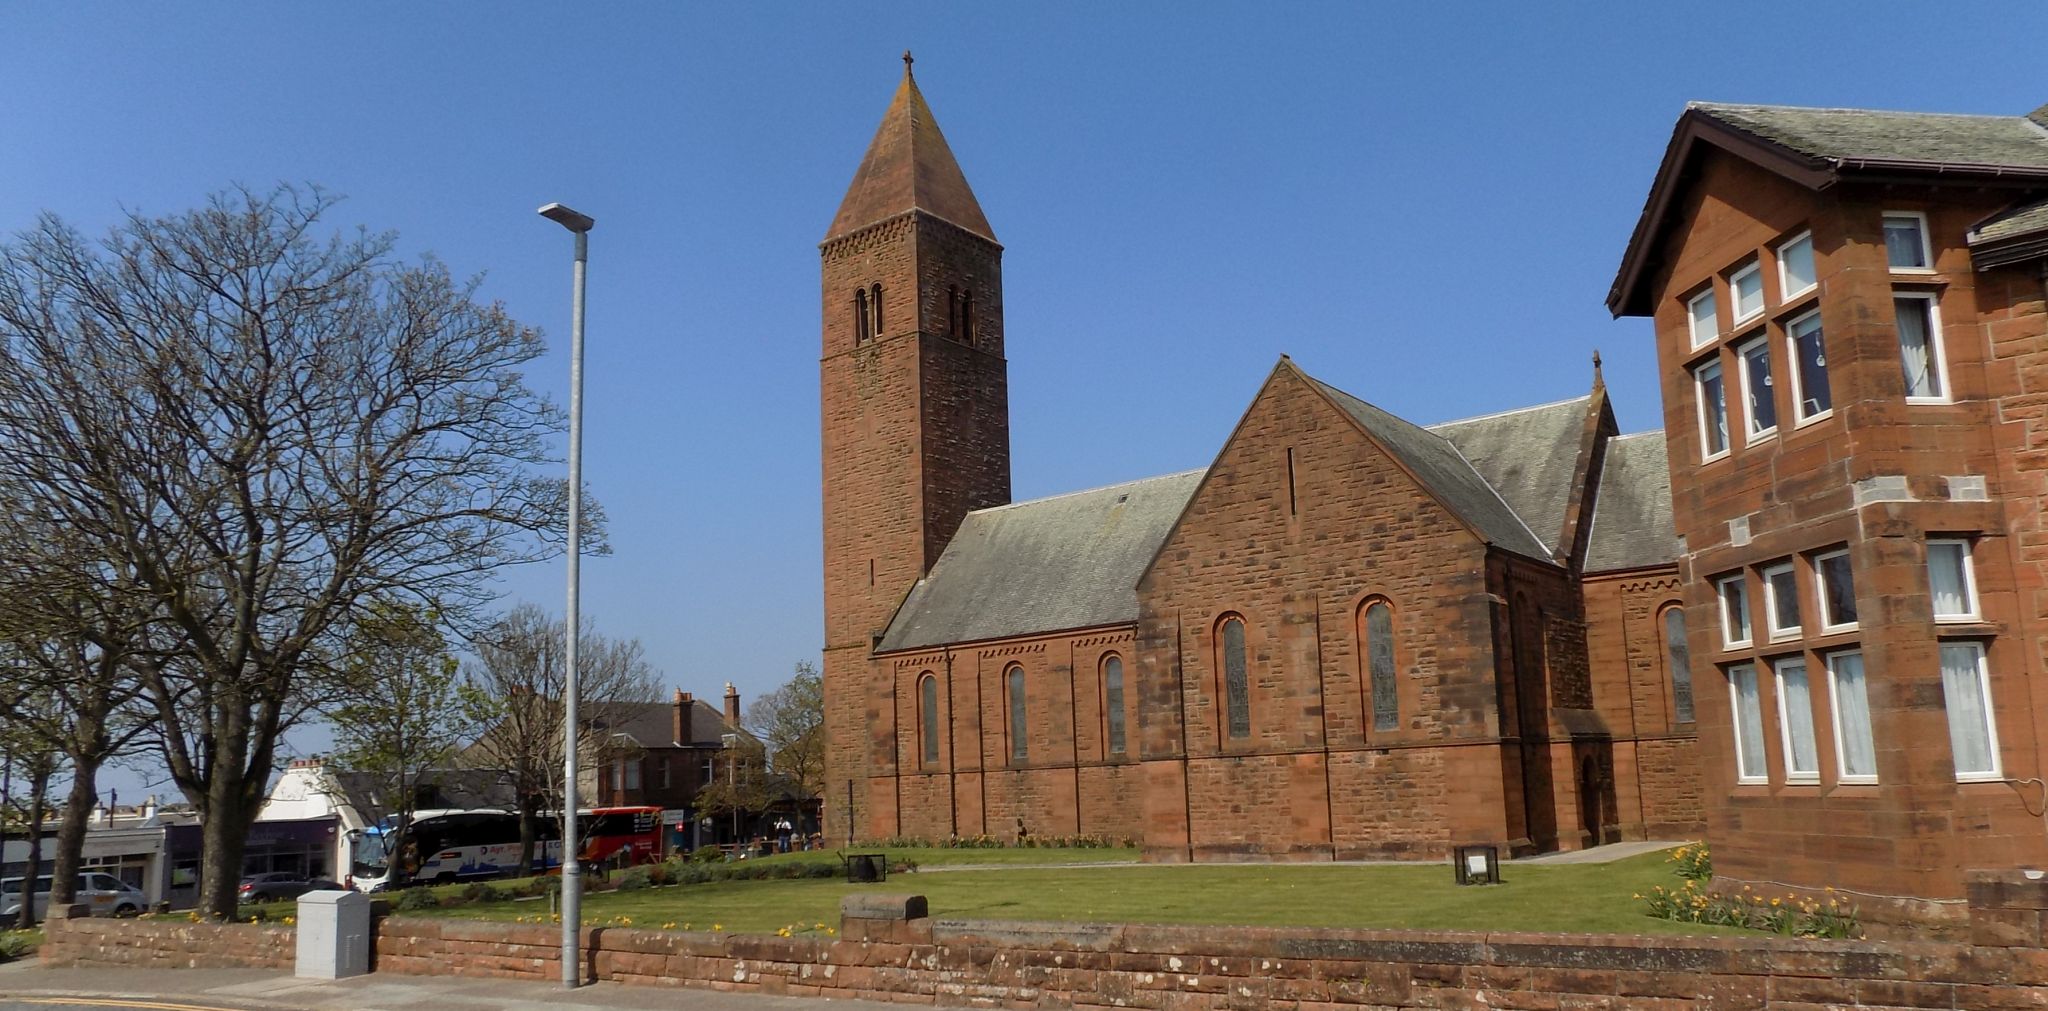 St Nicholas Church in Prestwick